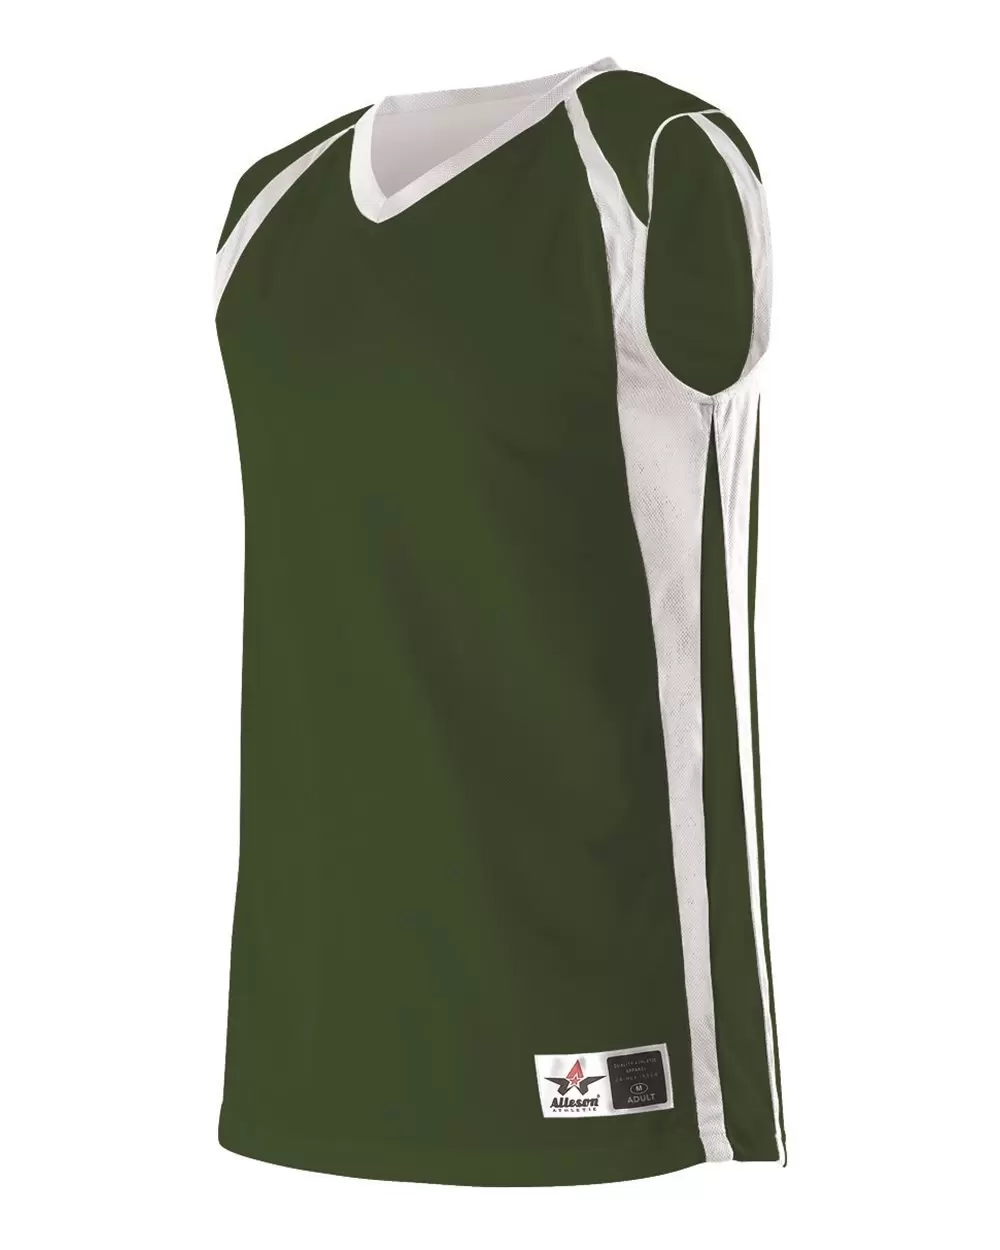 Good Quality Low MOQ Plus Size Sublimated Mesh Basketball Uniform